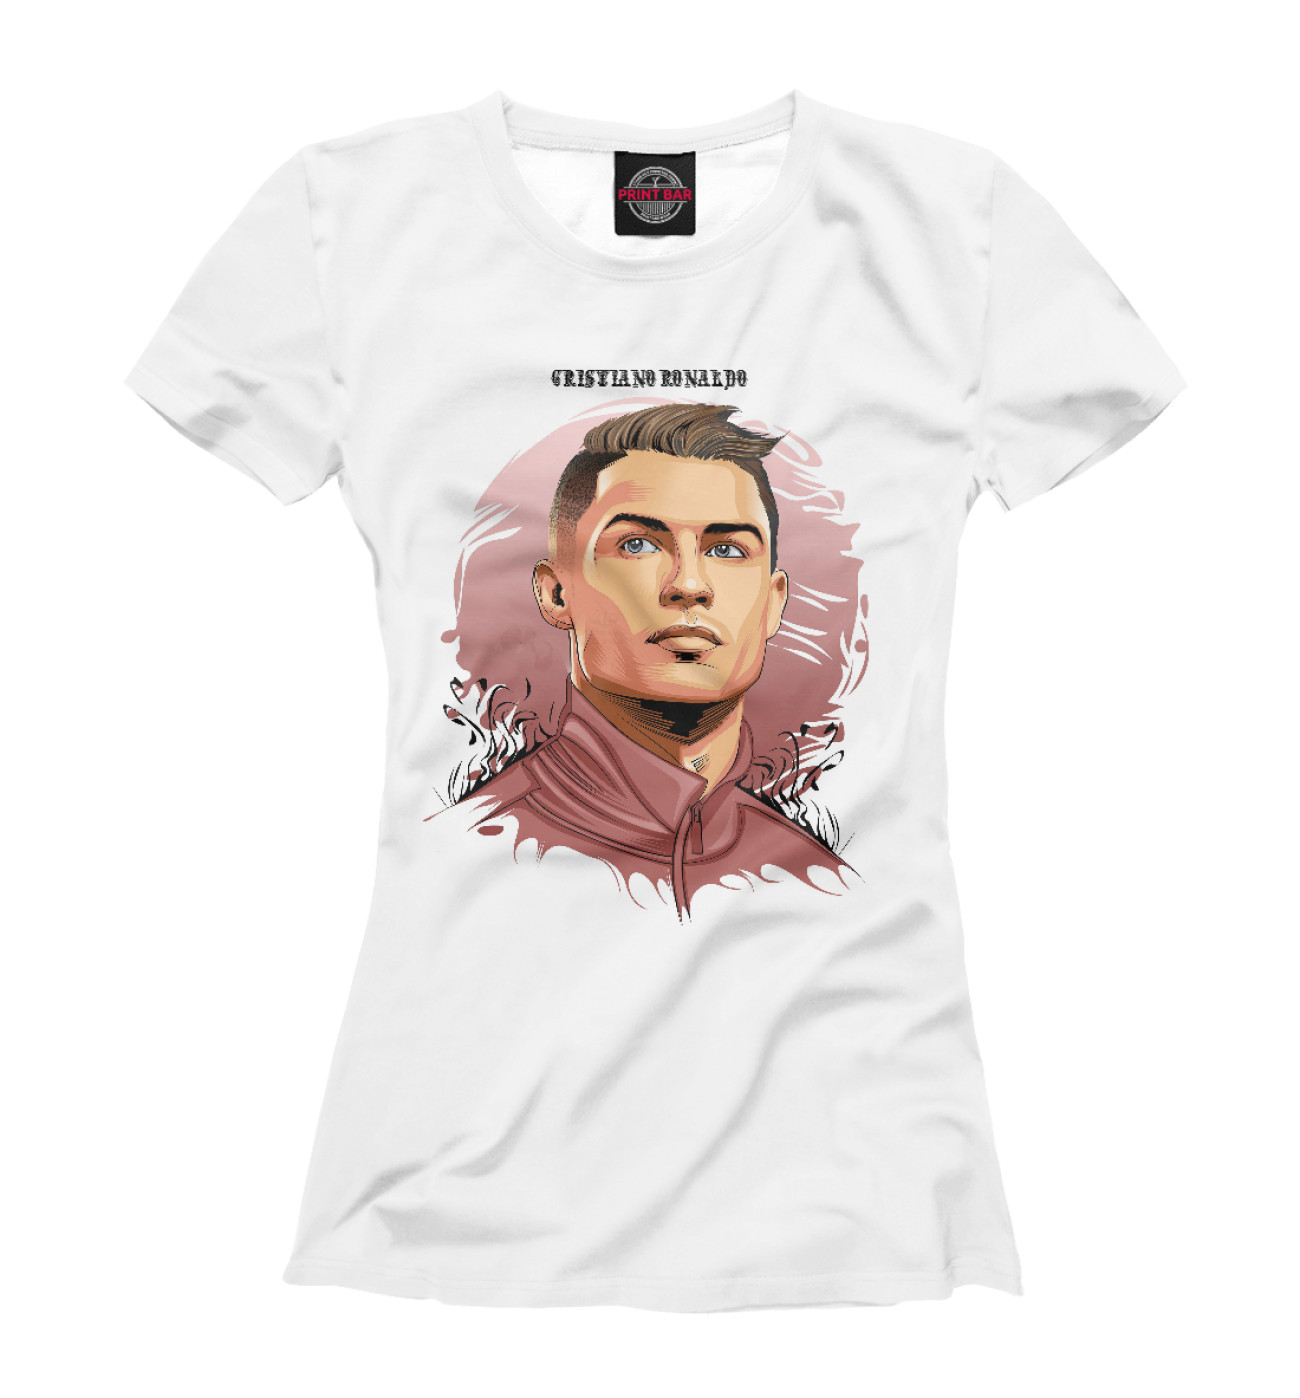 Женская Футболка Cristiano Ronaldo, артикул: FLT-876531-fut-1